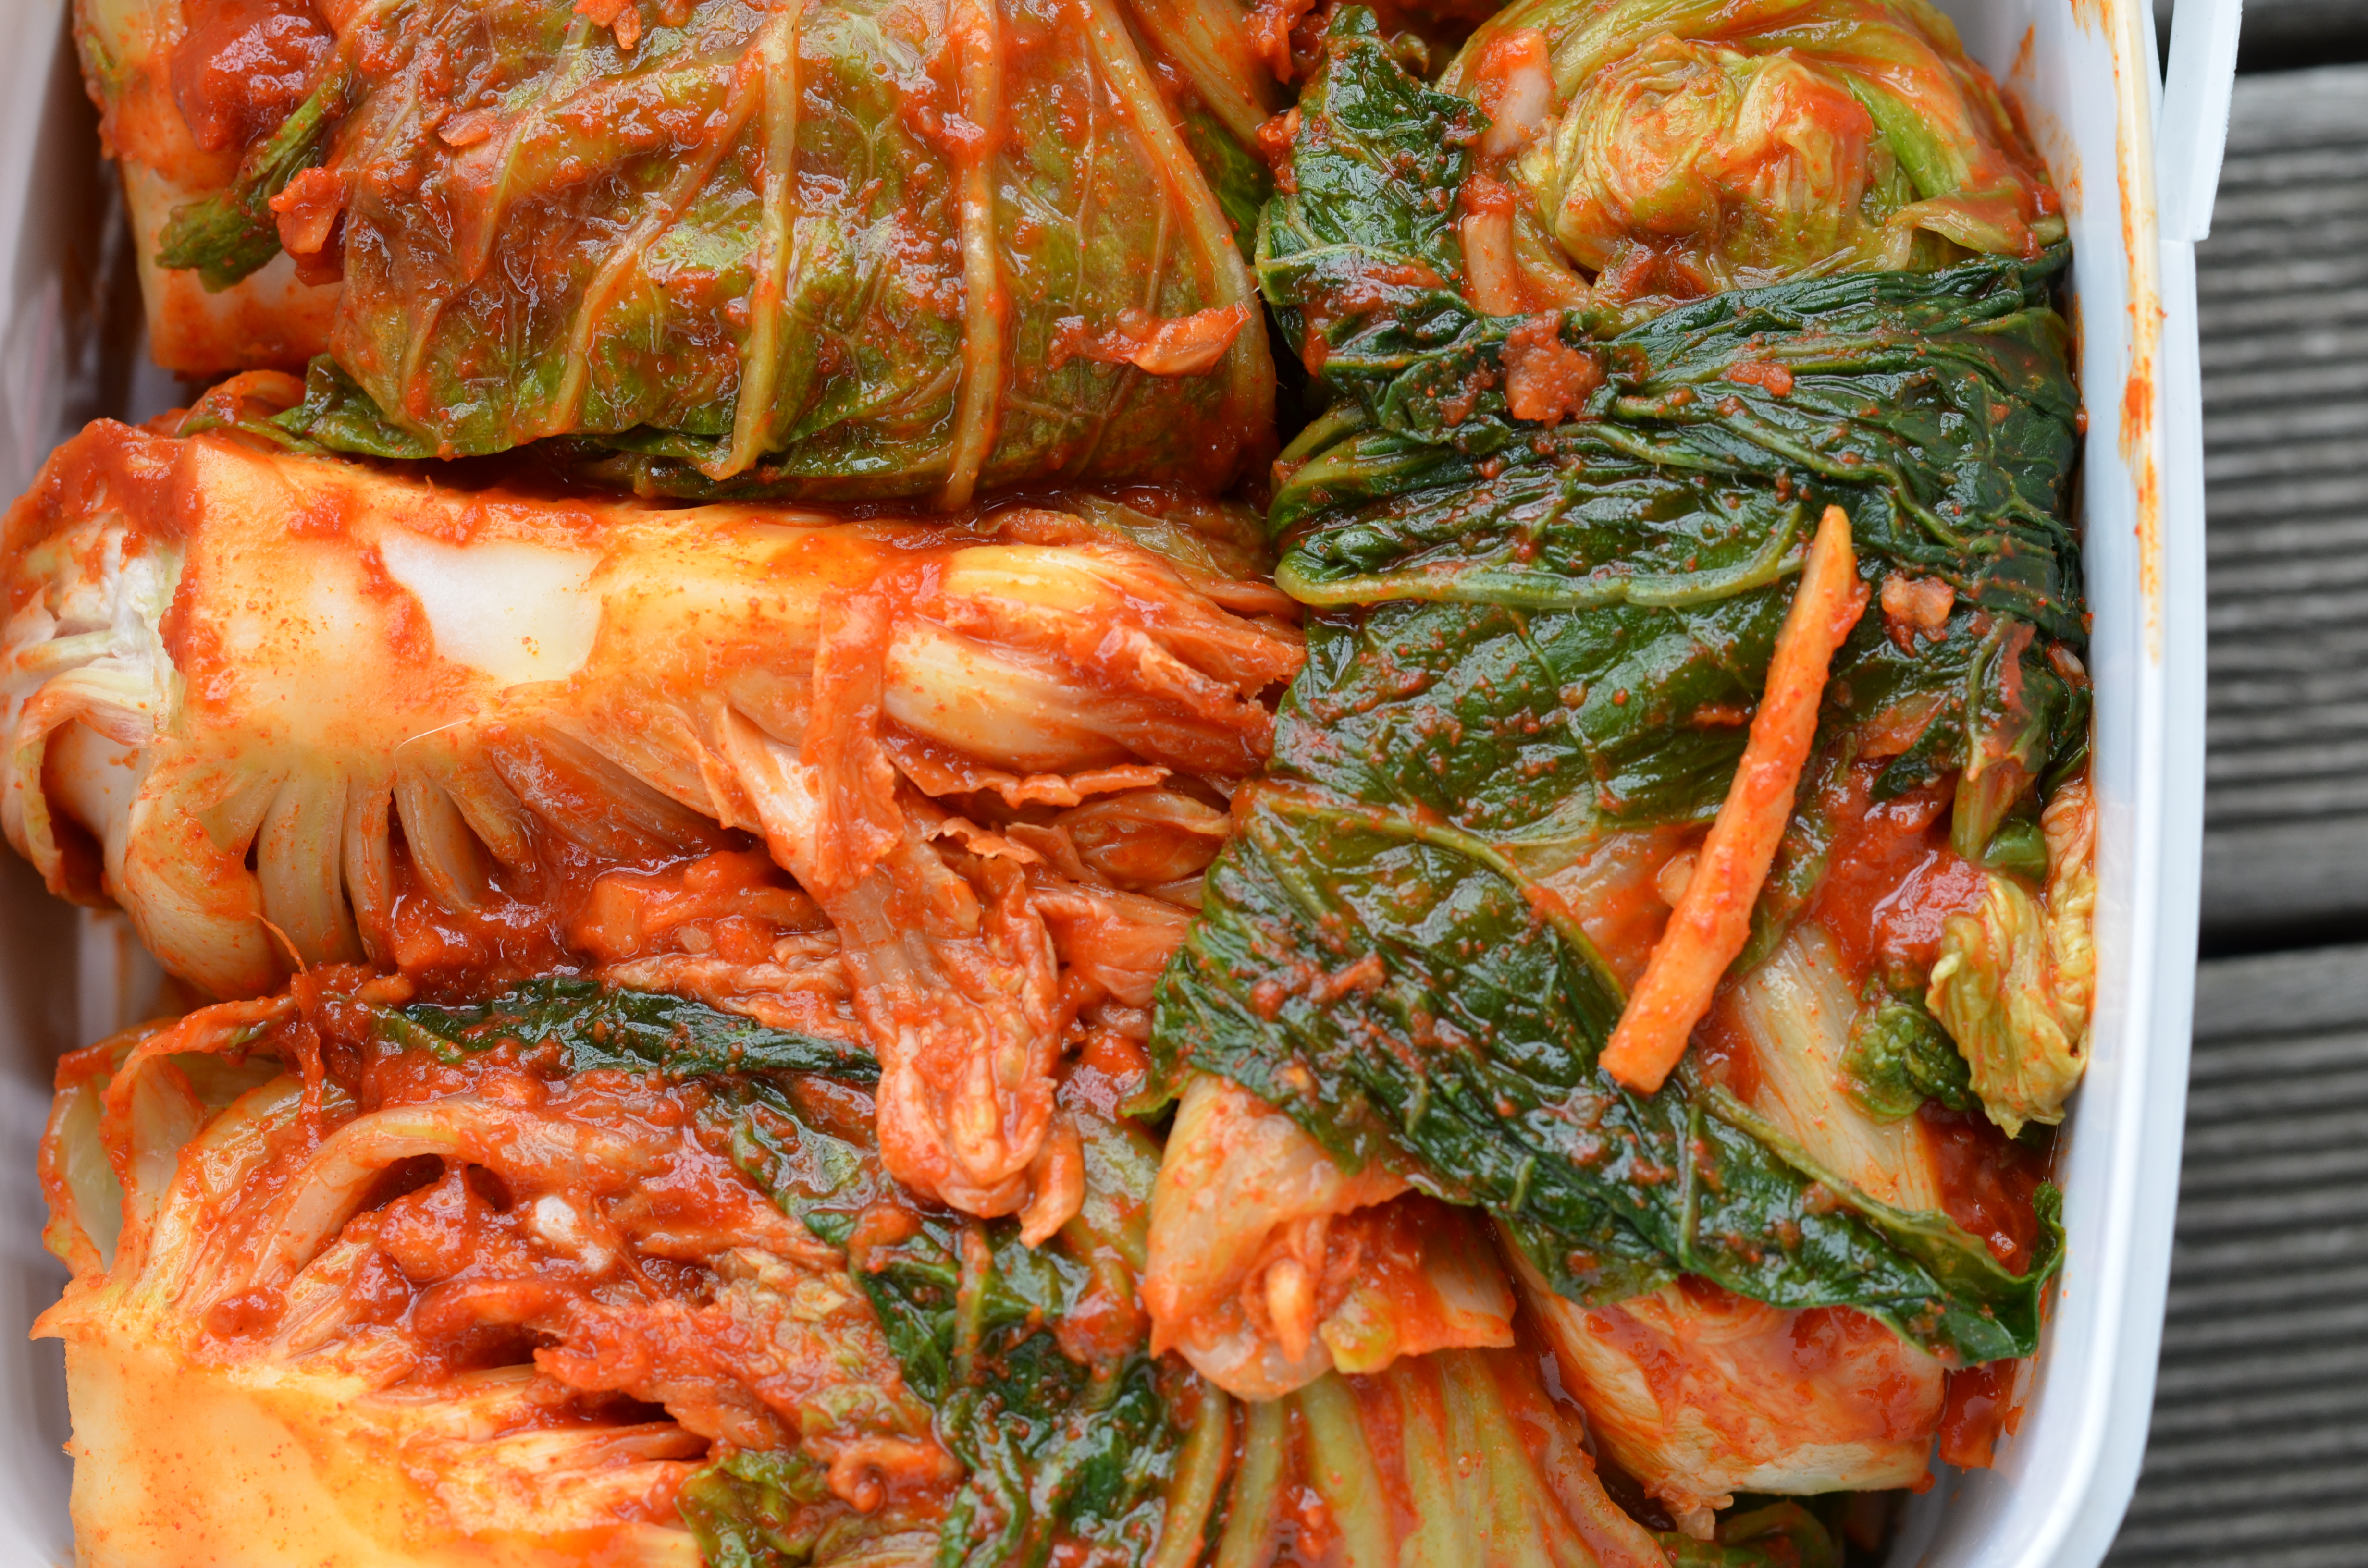 finished kimchi ready to ferment